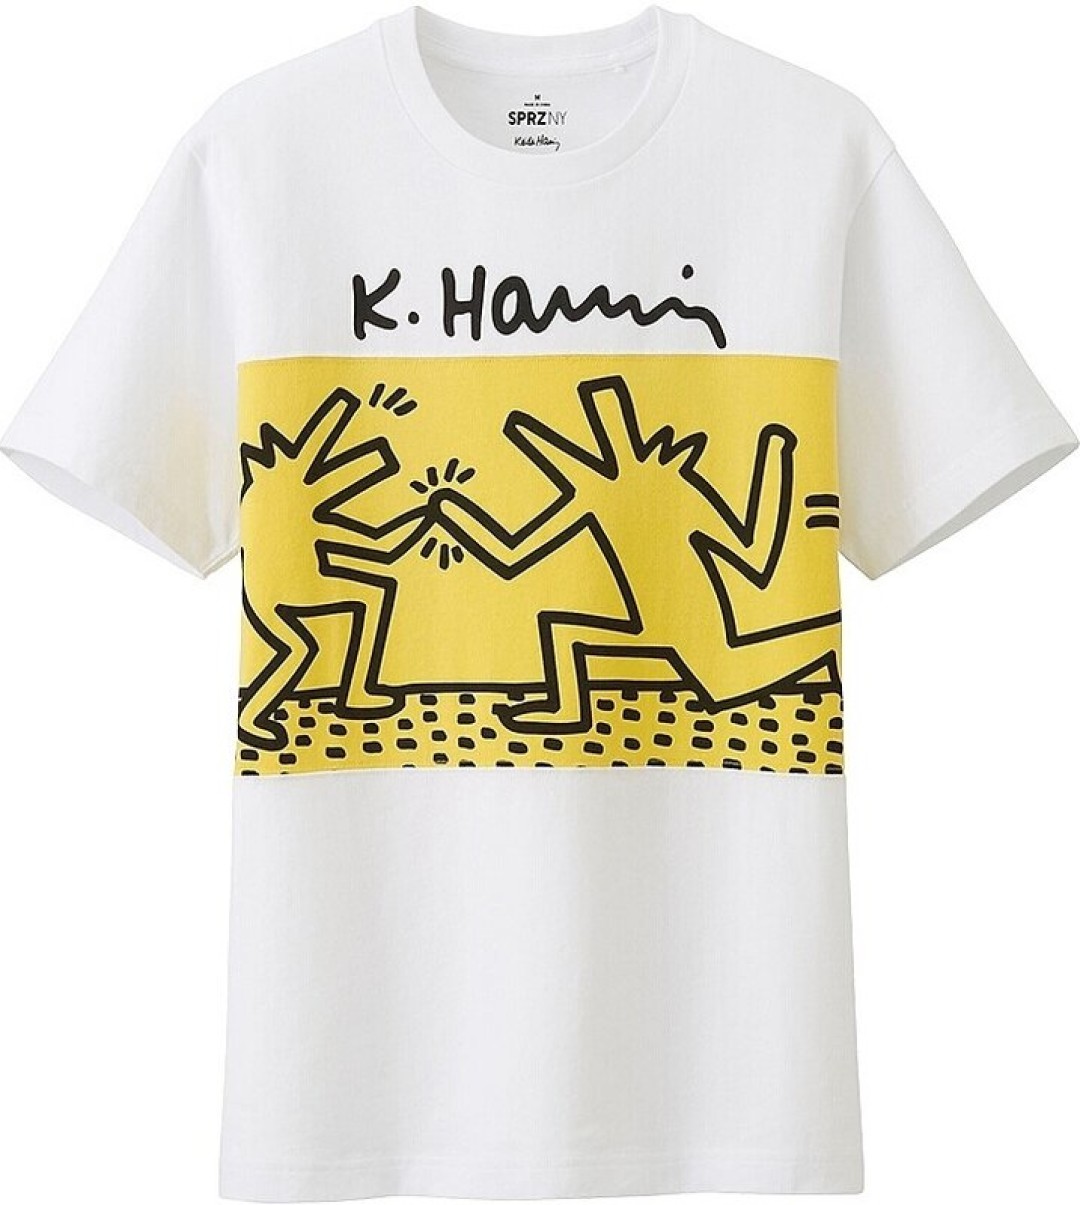 Кит харинг h m. Keith Haring футболка Uniqlo. Keith Haring одежда Uniqlo. Uniqlo SPRZ NY футболка. Кит Харинг футболка.